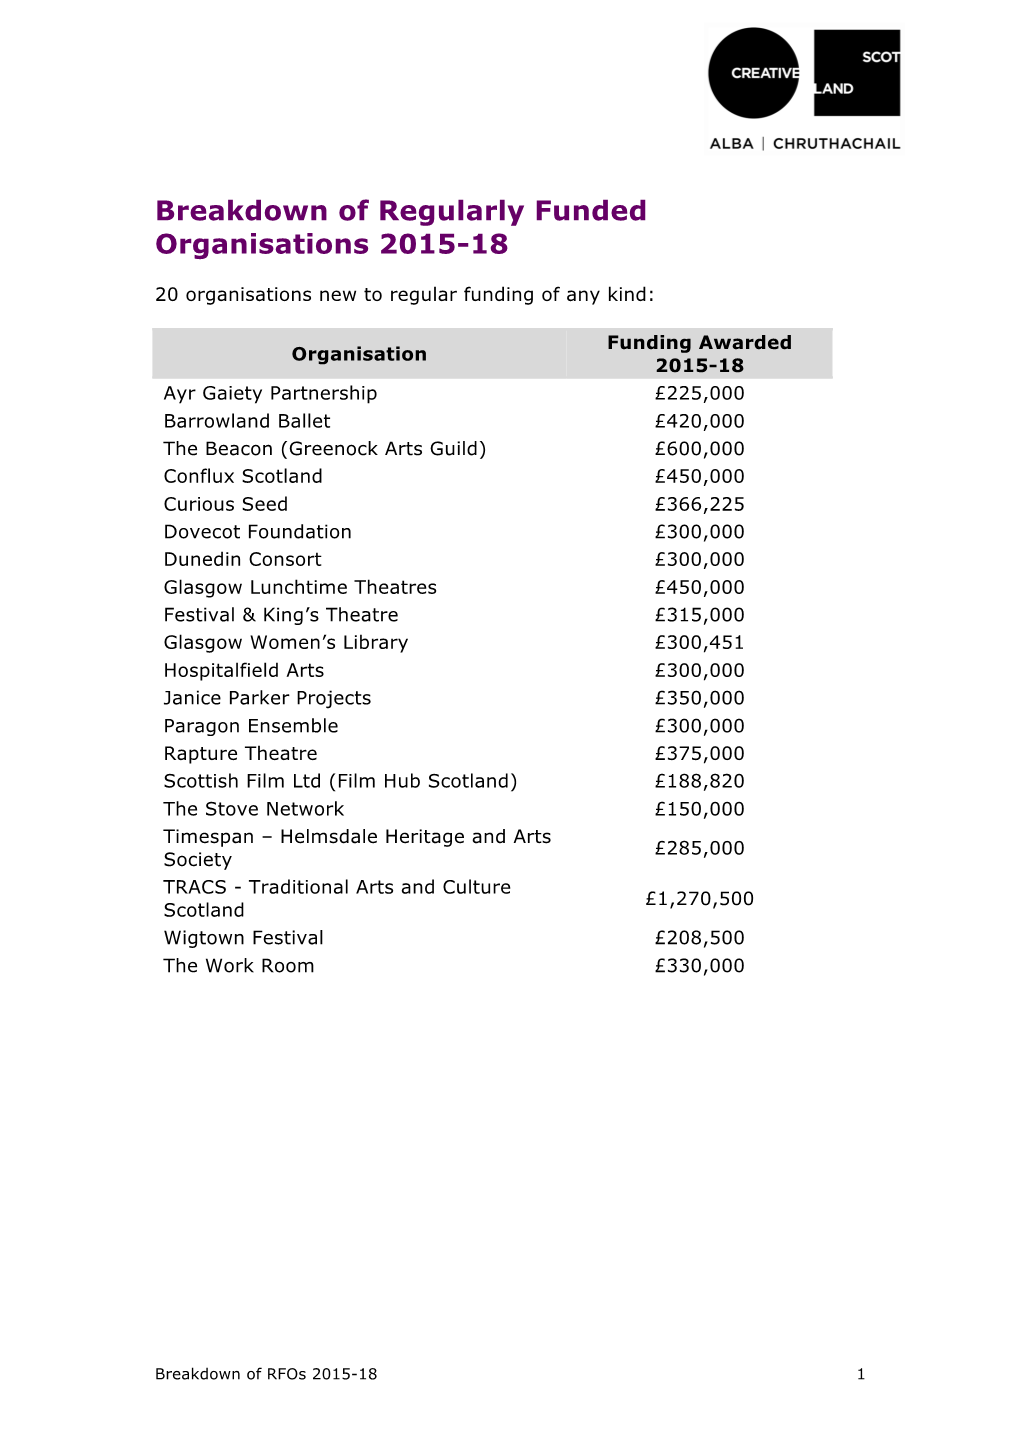 Breakdown of Regularly Funded Organisations 2015-18